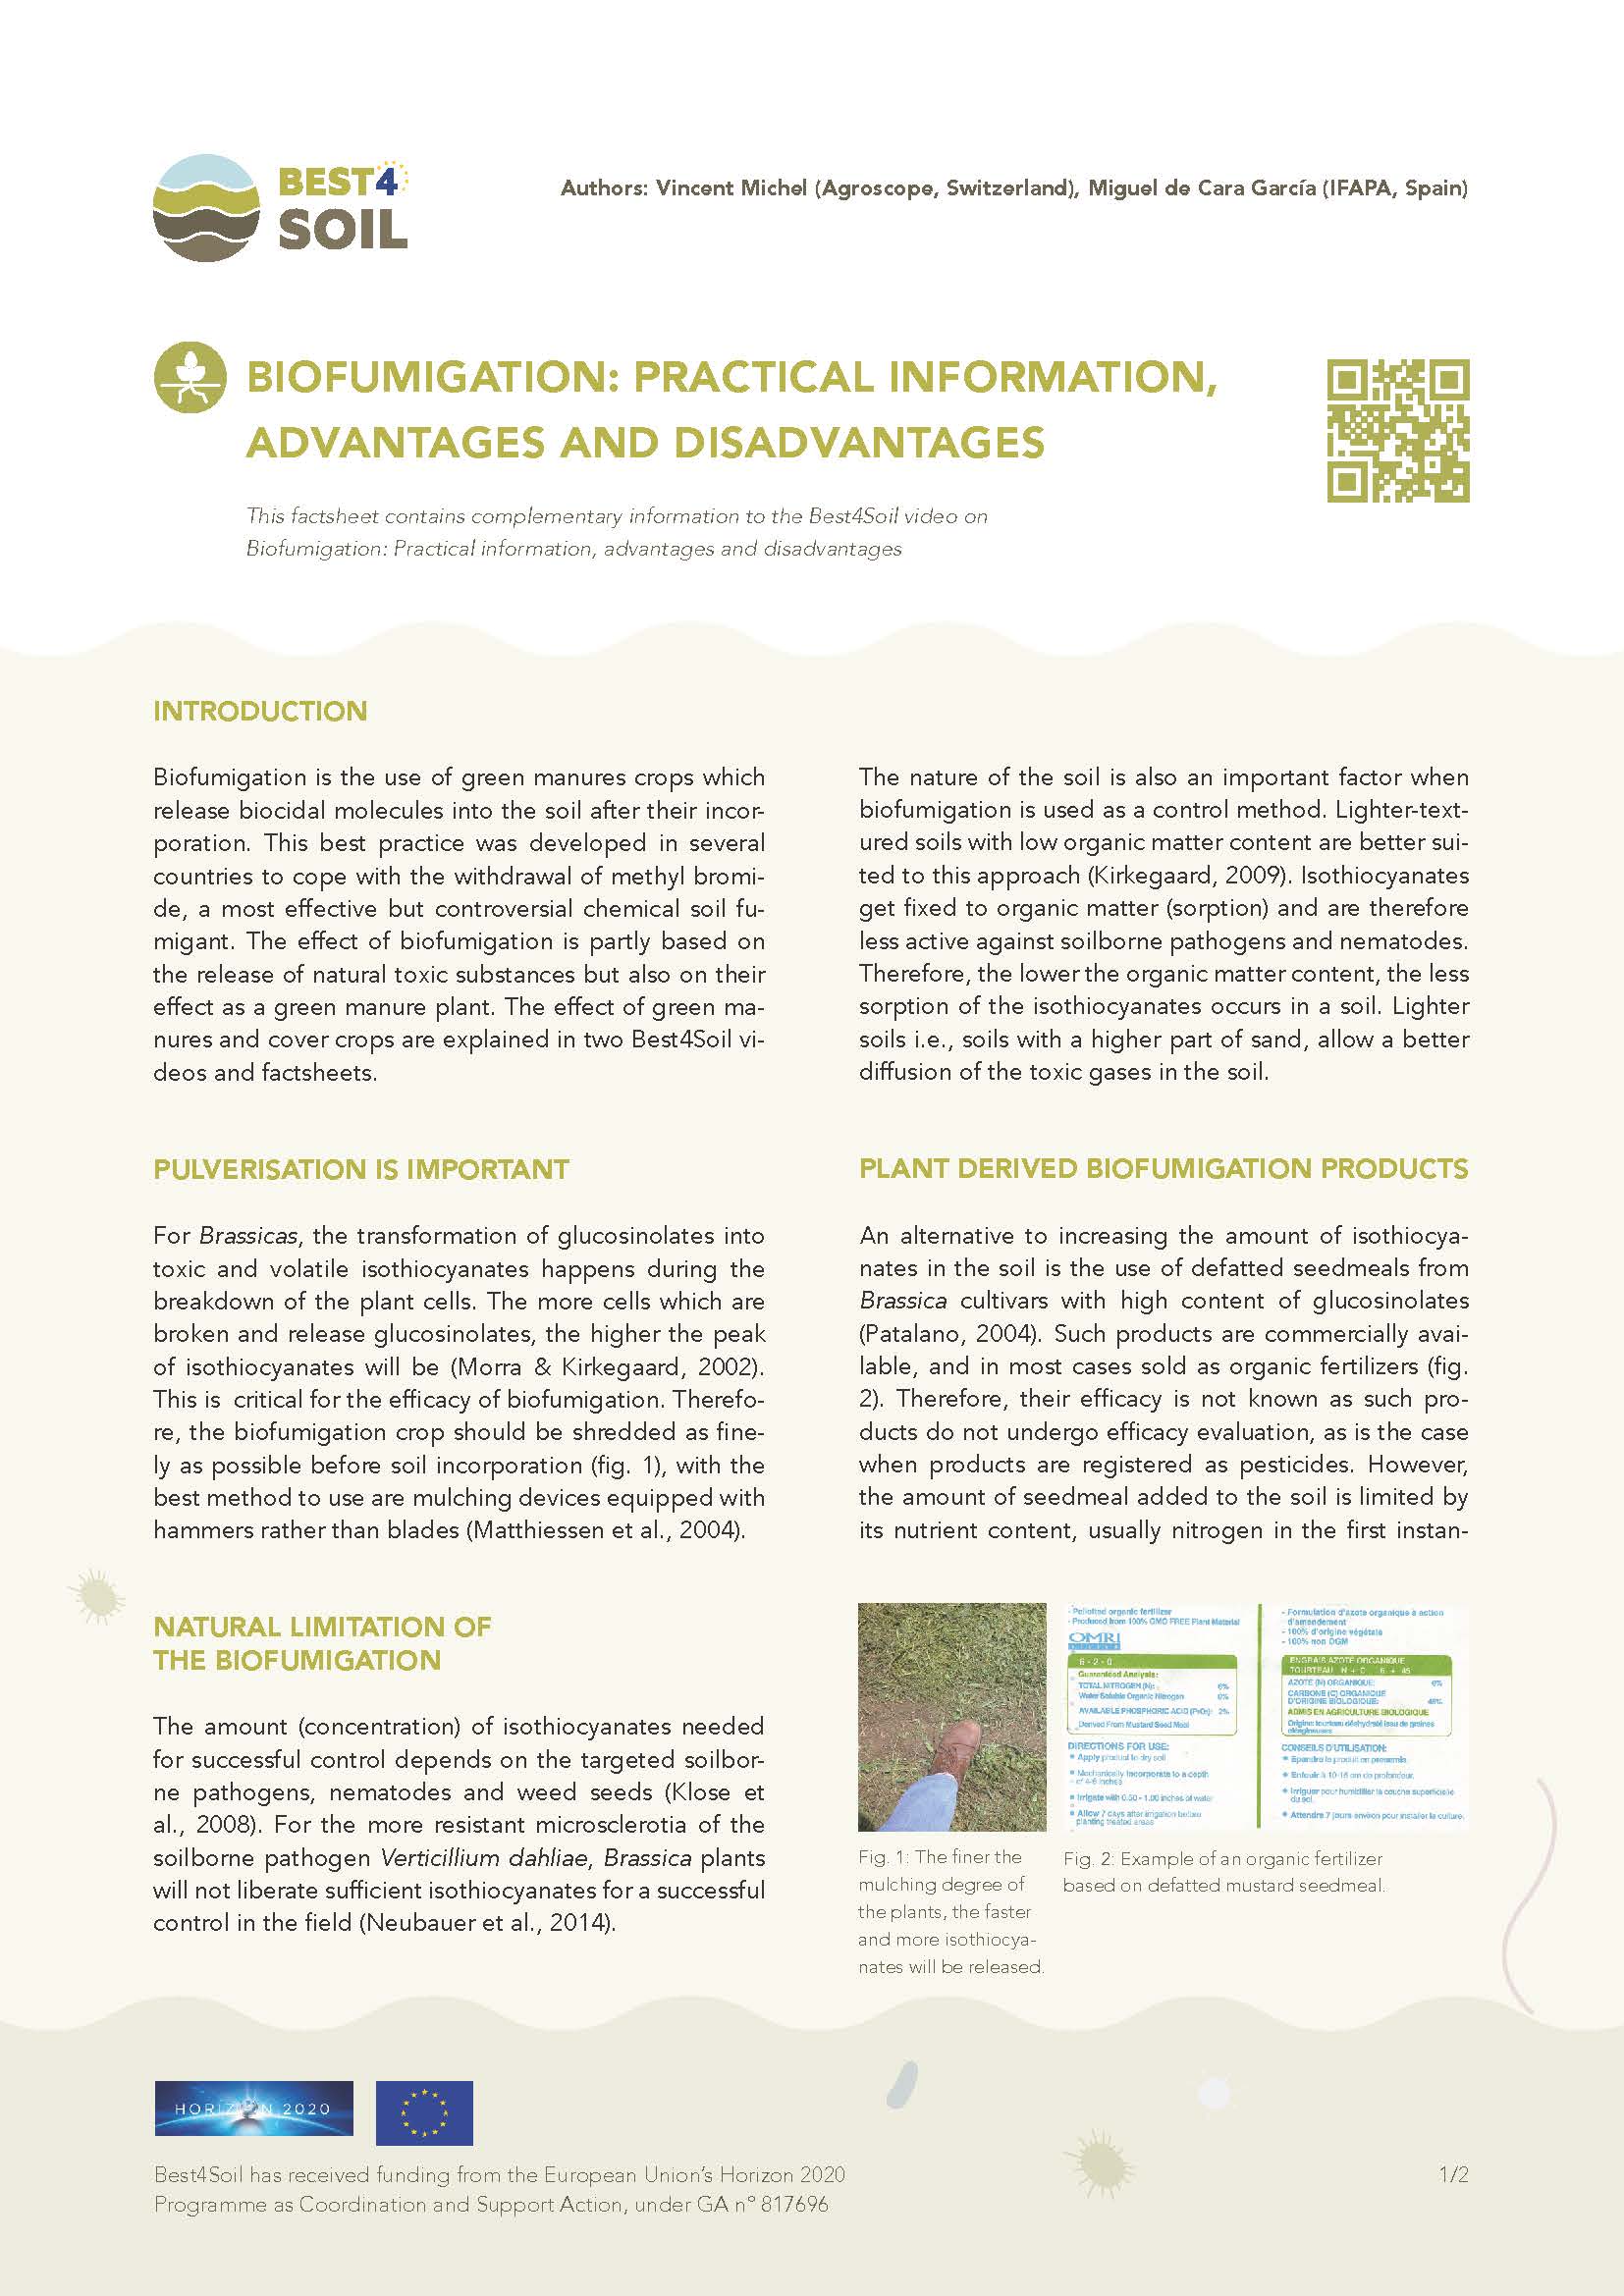 Biofumigation: Πρακτικές πληροφορίες, πλεονεκτήματα και μειονεκτήματα (Best4Soil Factsheet)